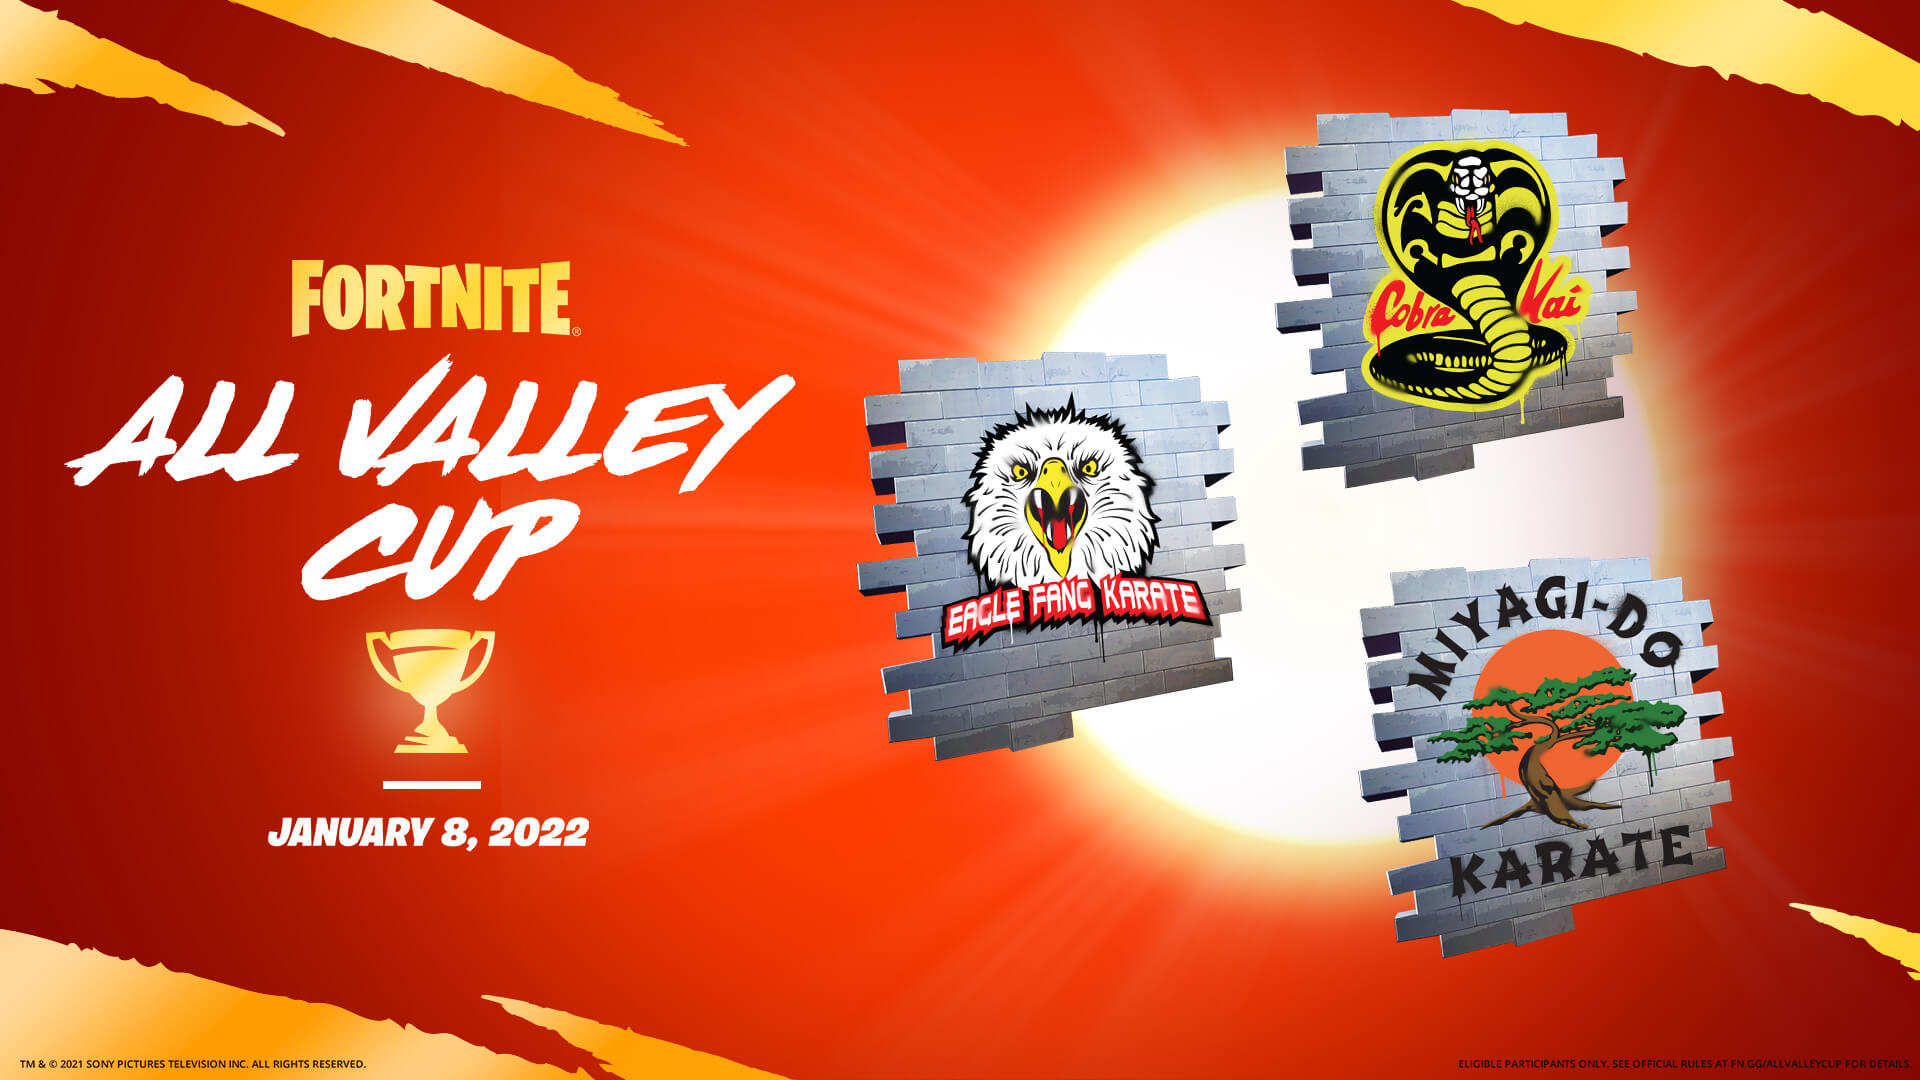 Fortnite X Cobra Kai Get Sprays In Fortnite All Valley Cup